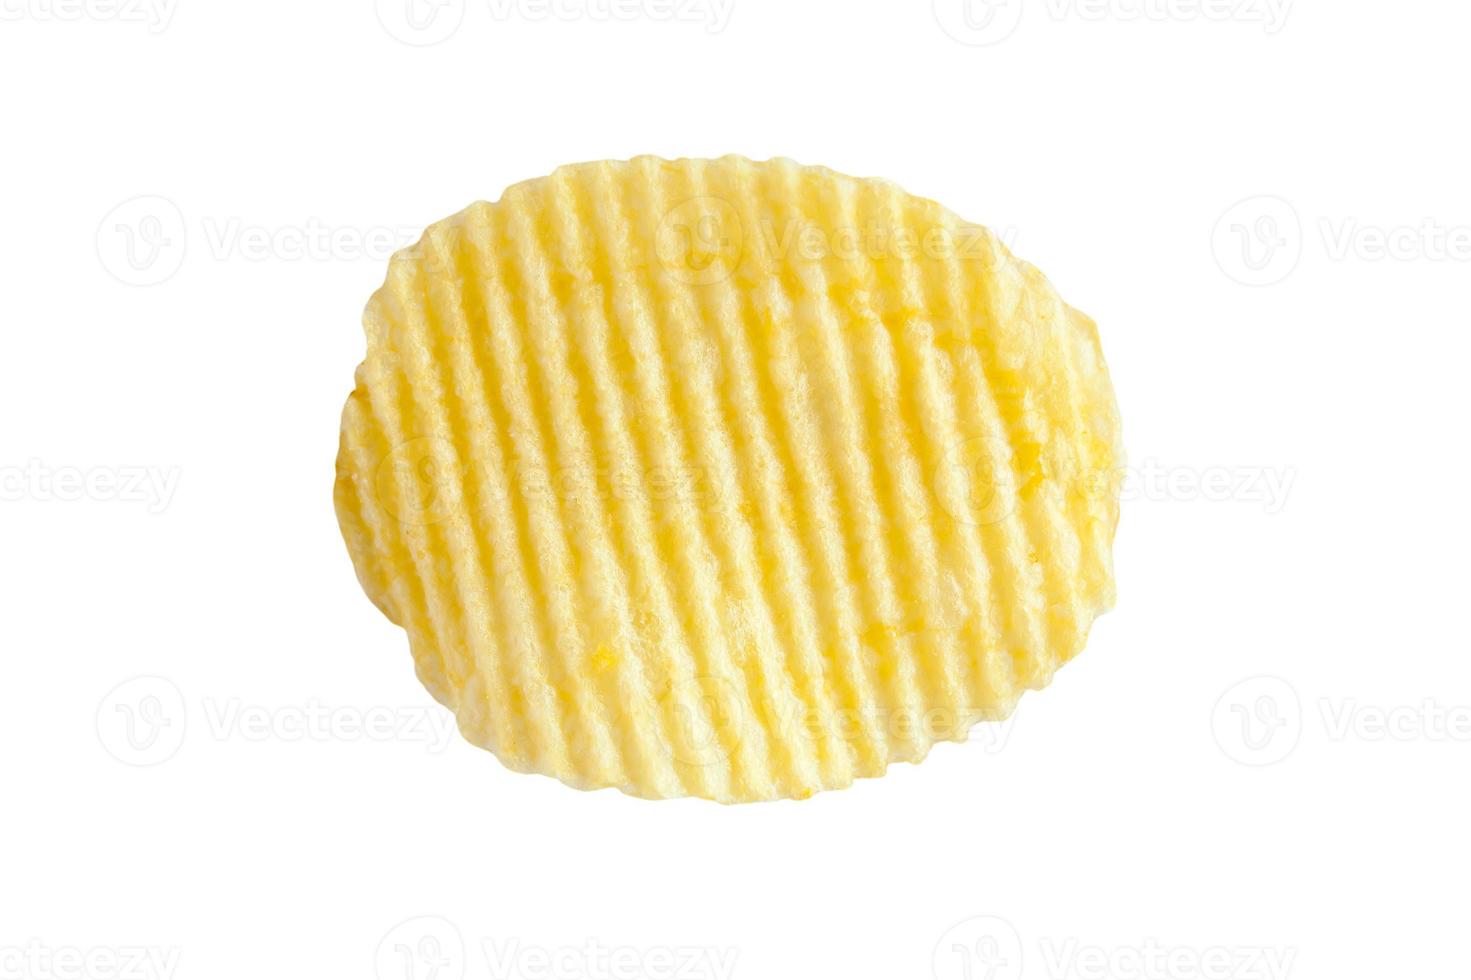 potato chip on white background close-up photo